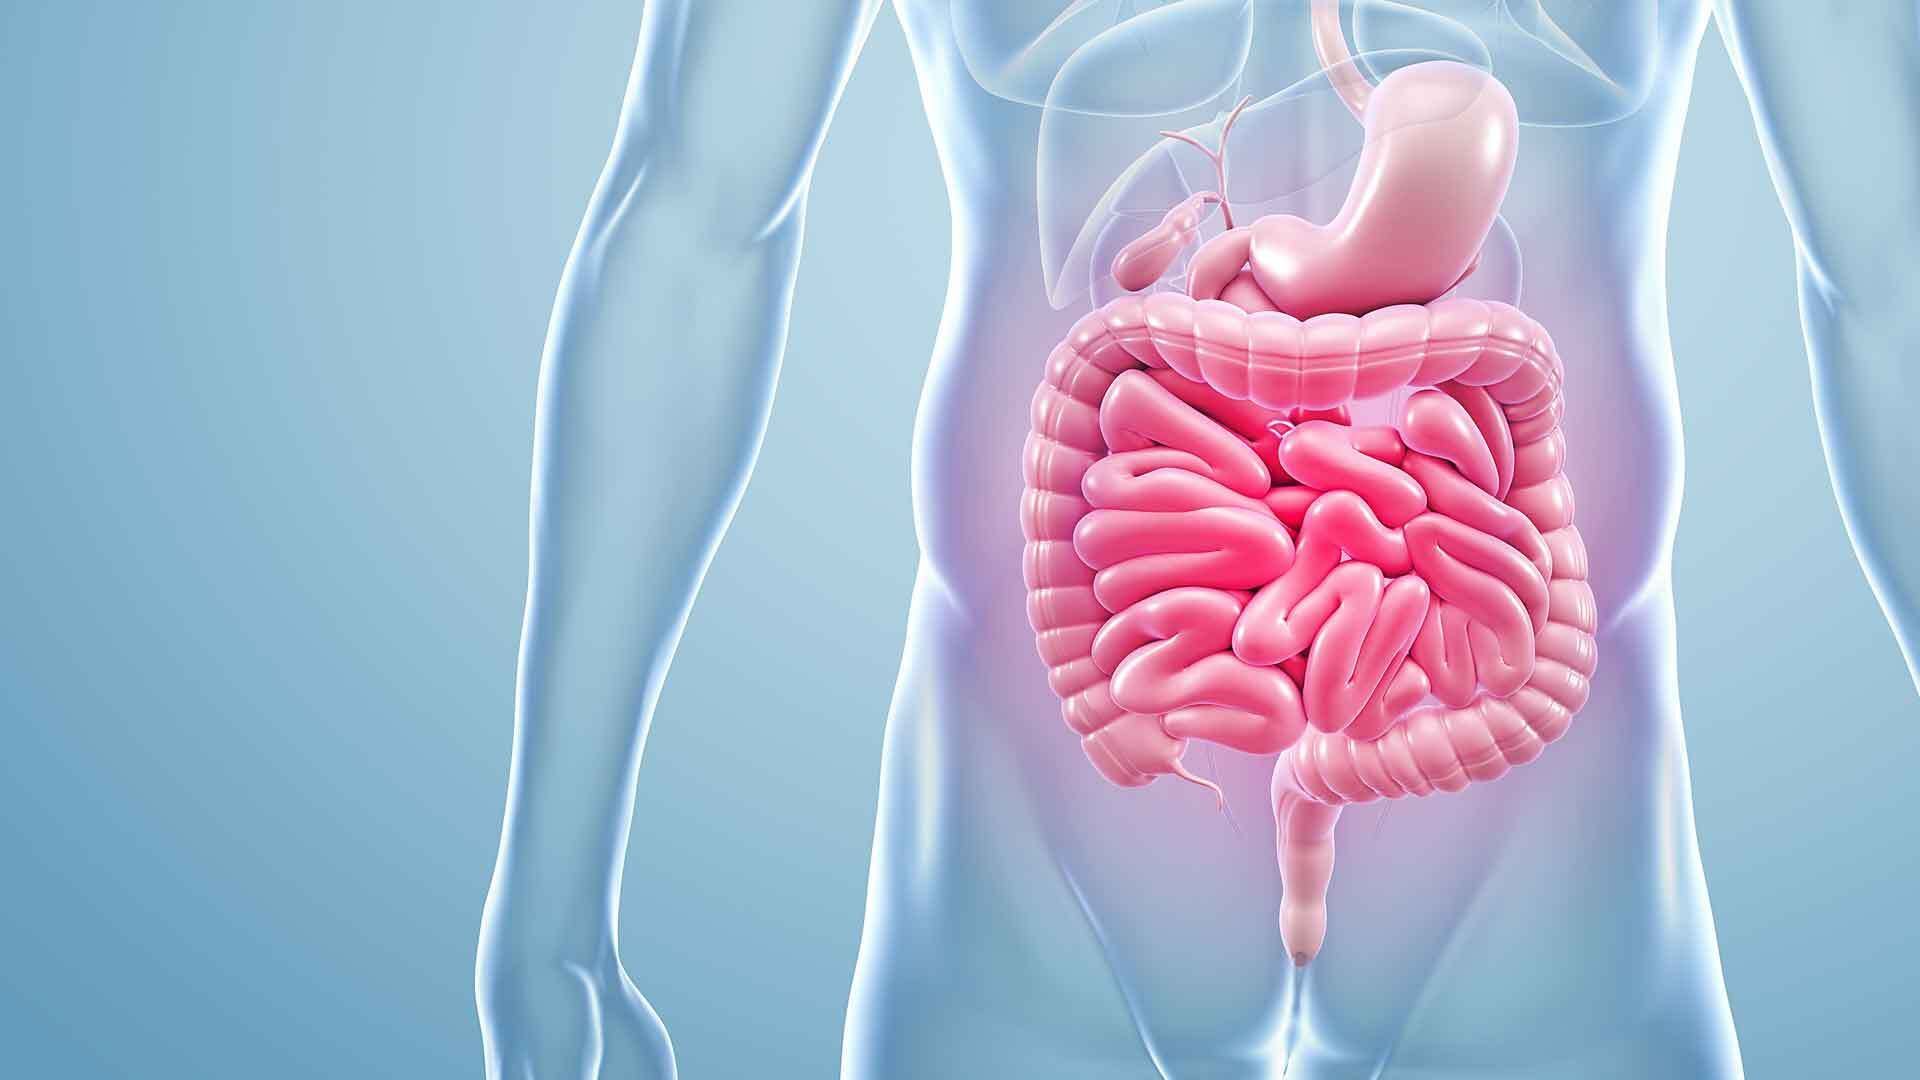 Intestinal obstruction: typical symptoms of ileus